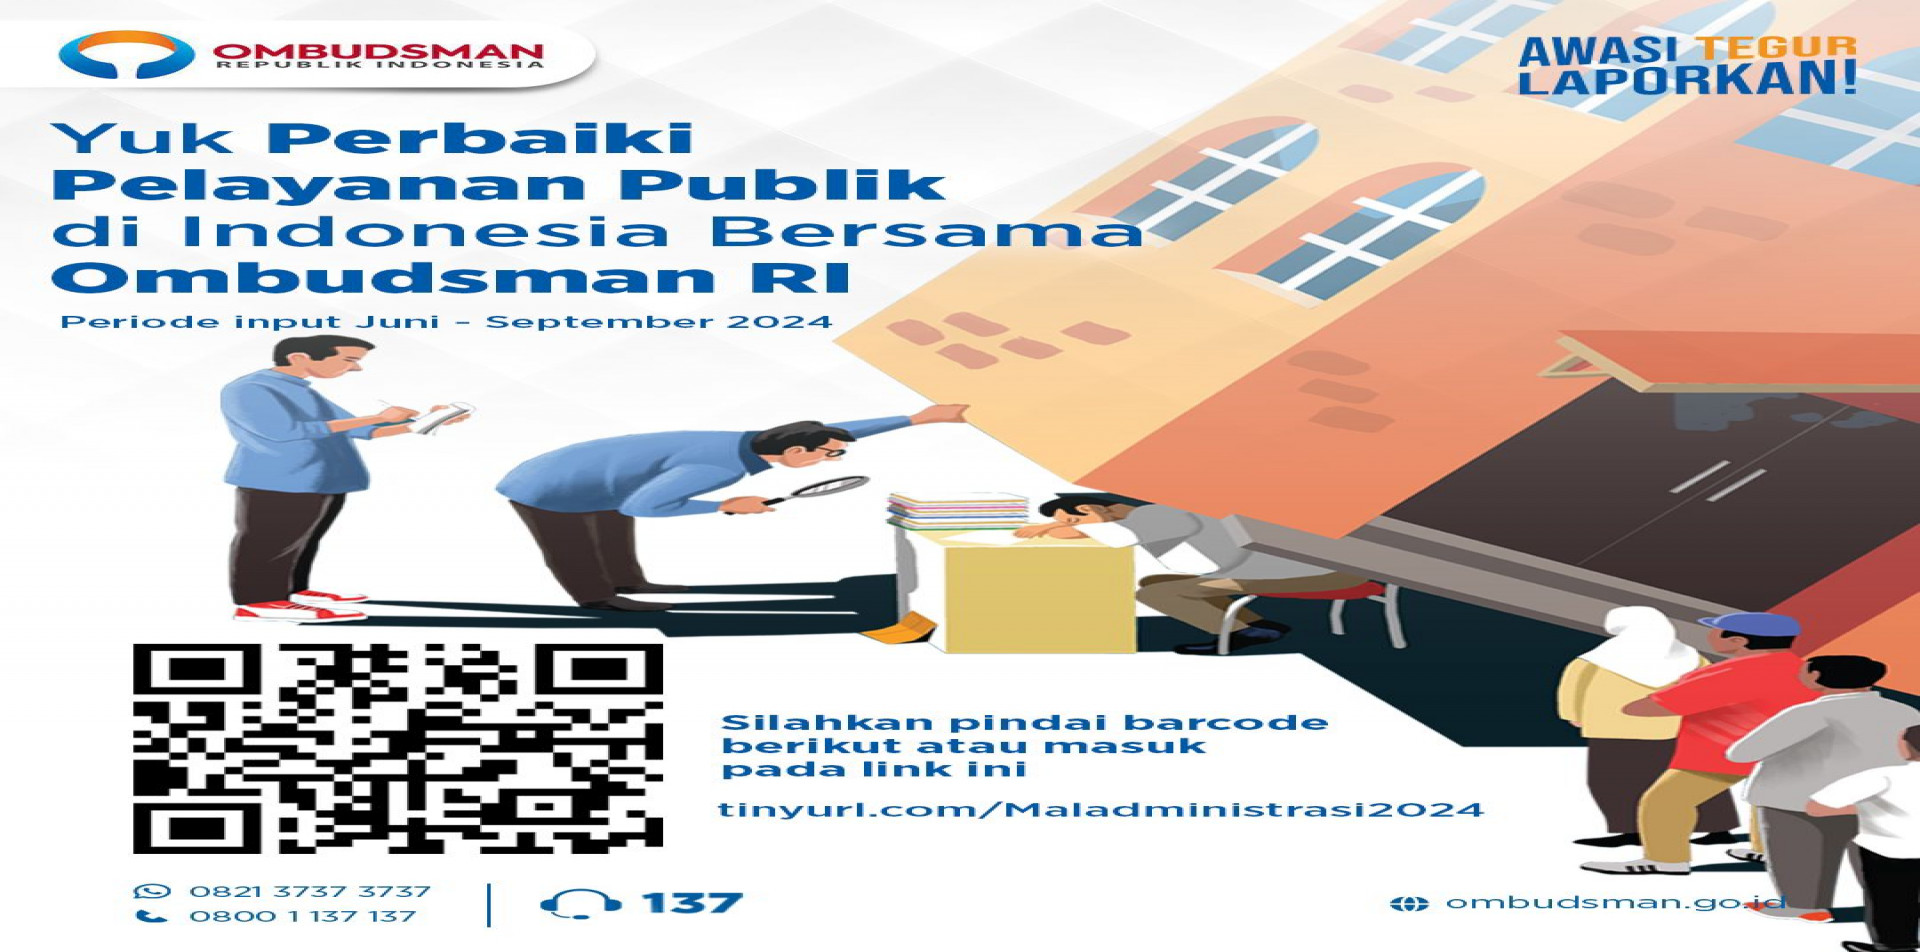 Pelayanan publik ombudsman